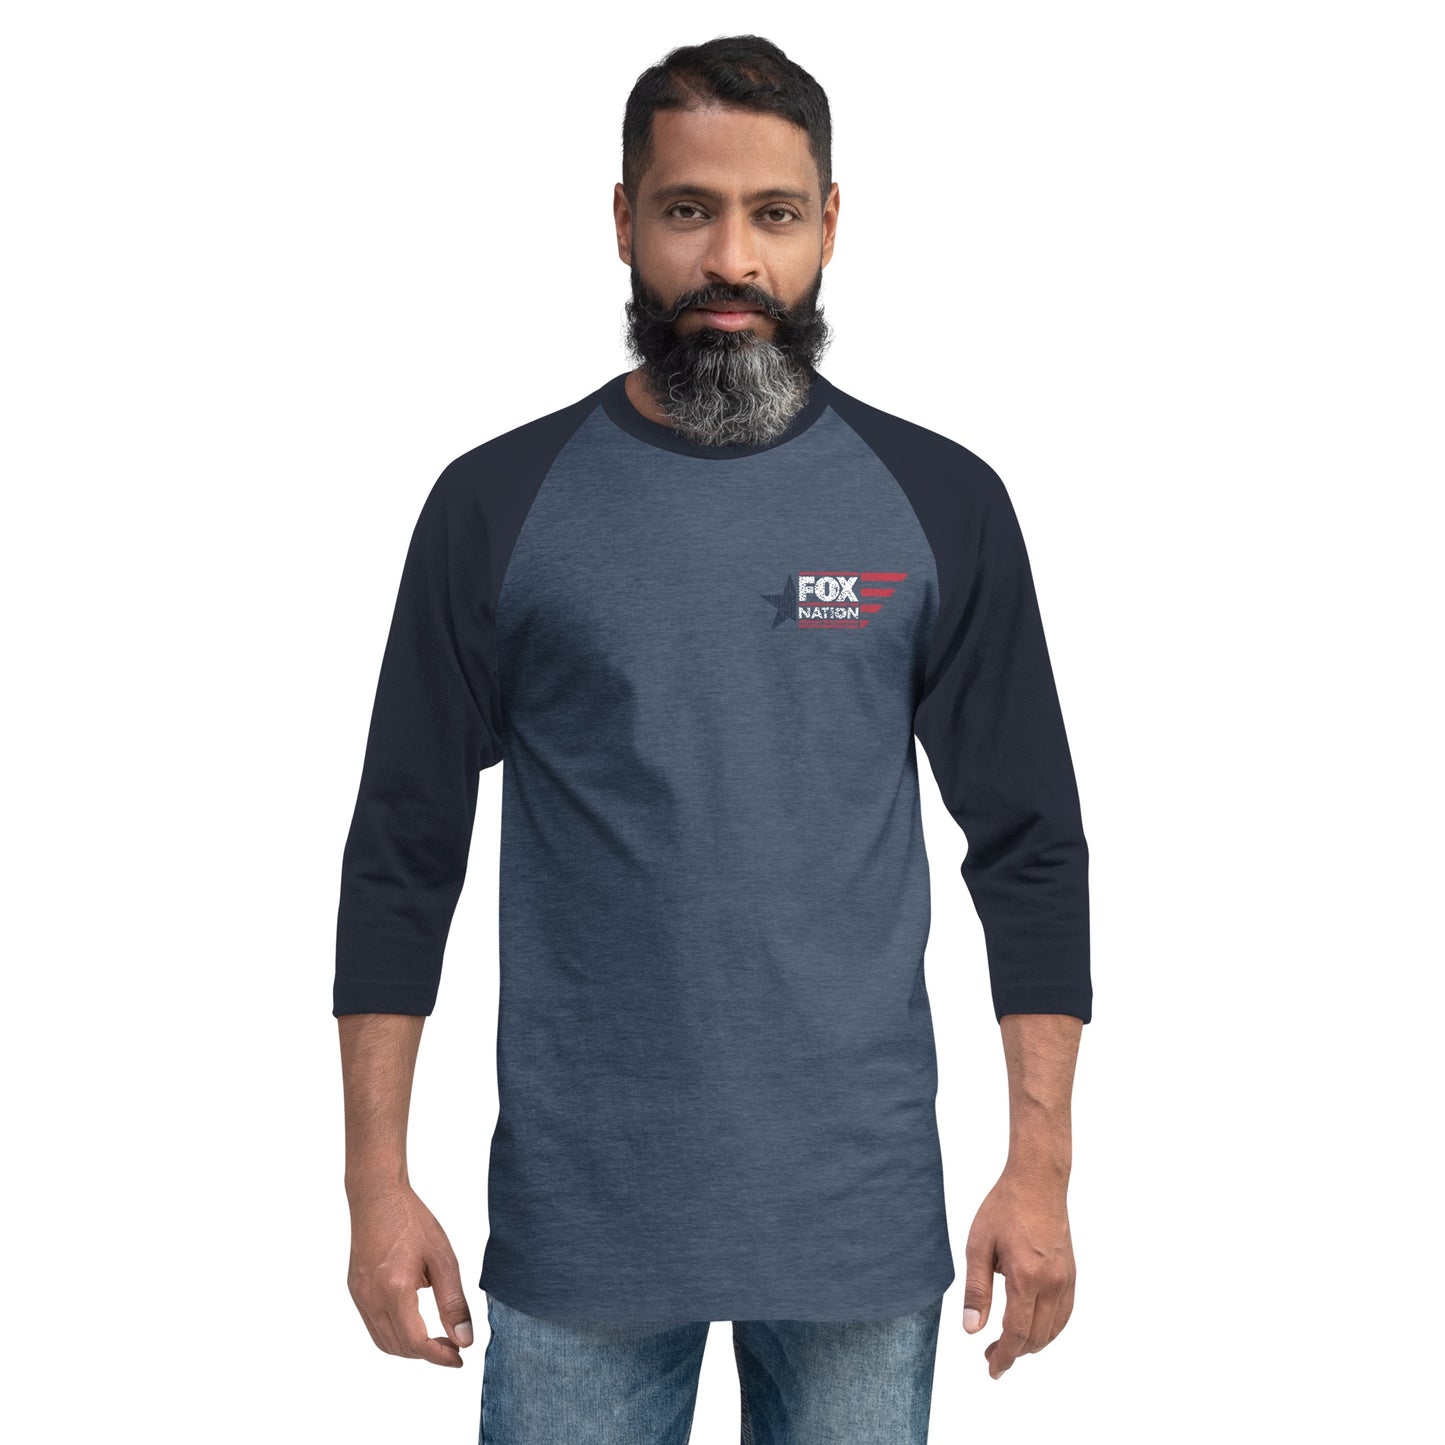 FOX Nation Logo 3/4 Sleeve Raglan Shirt